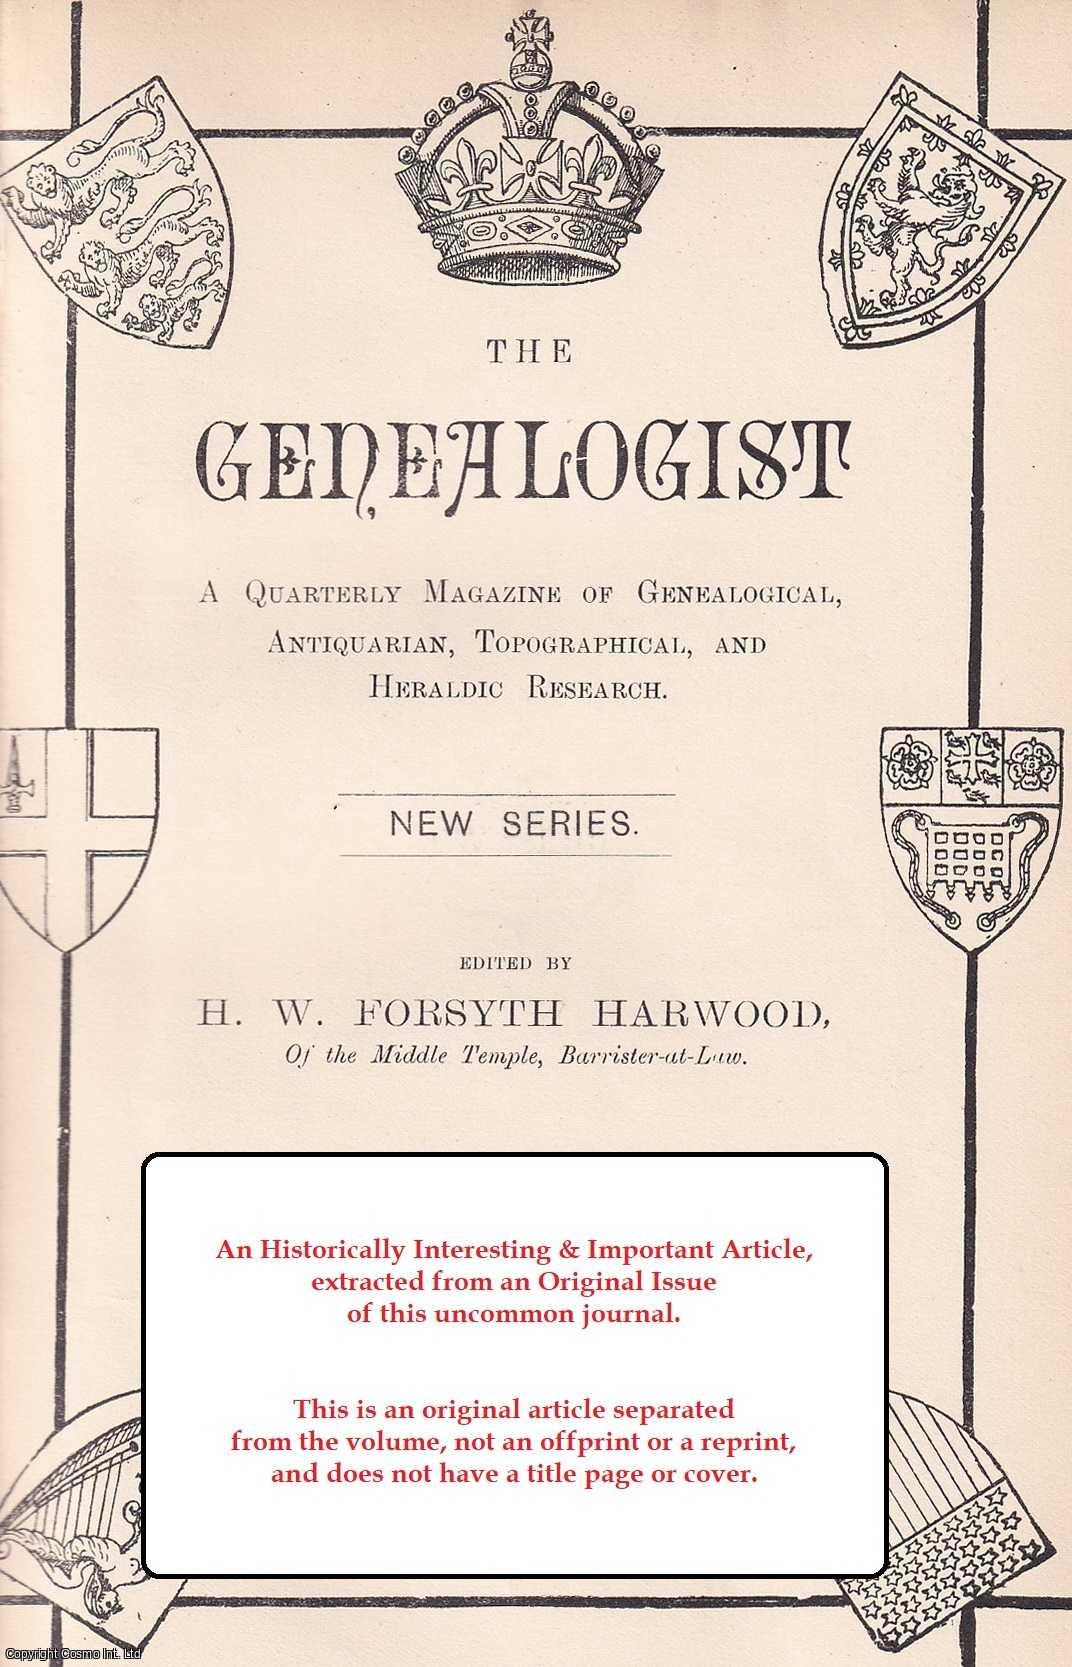 William Smith Ellis - The Pedigree of Honywood of Horsham. An original article from The Genealogist, 1887.